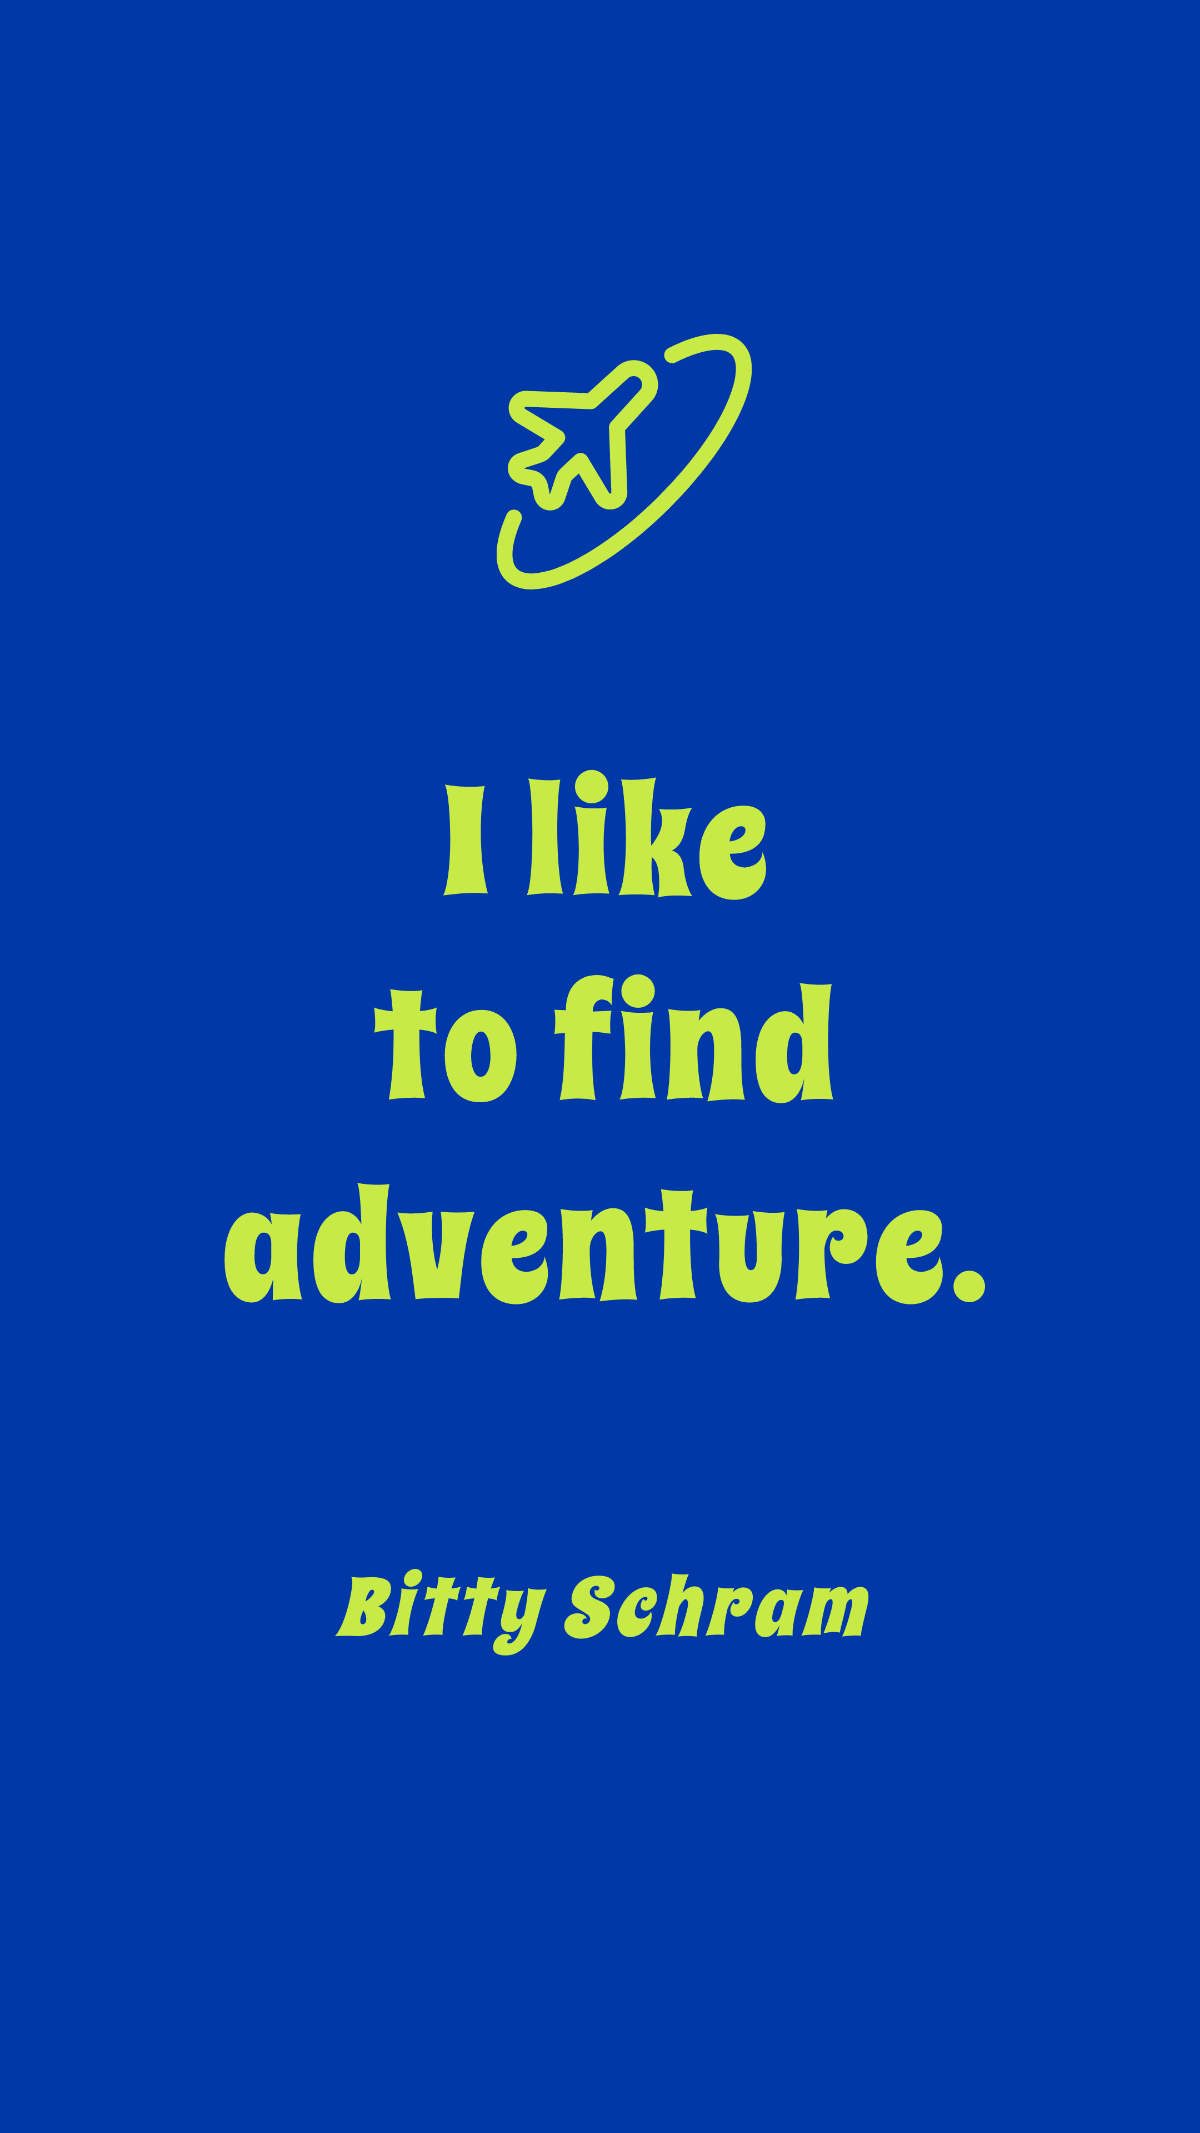 Bitty Schram - I like to find adventure. Template